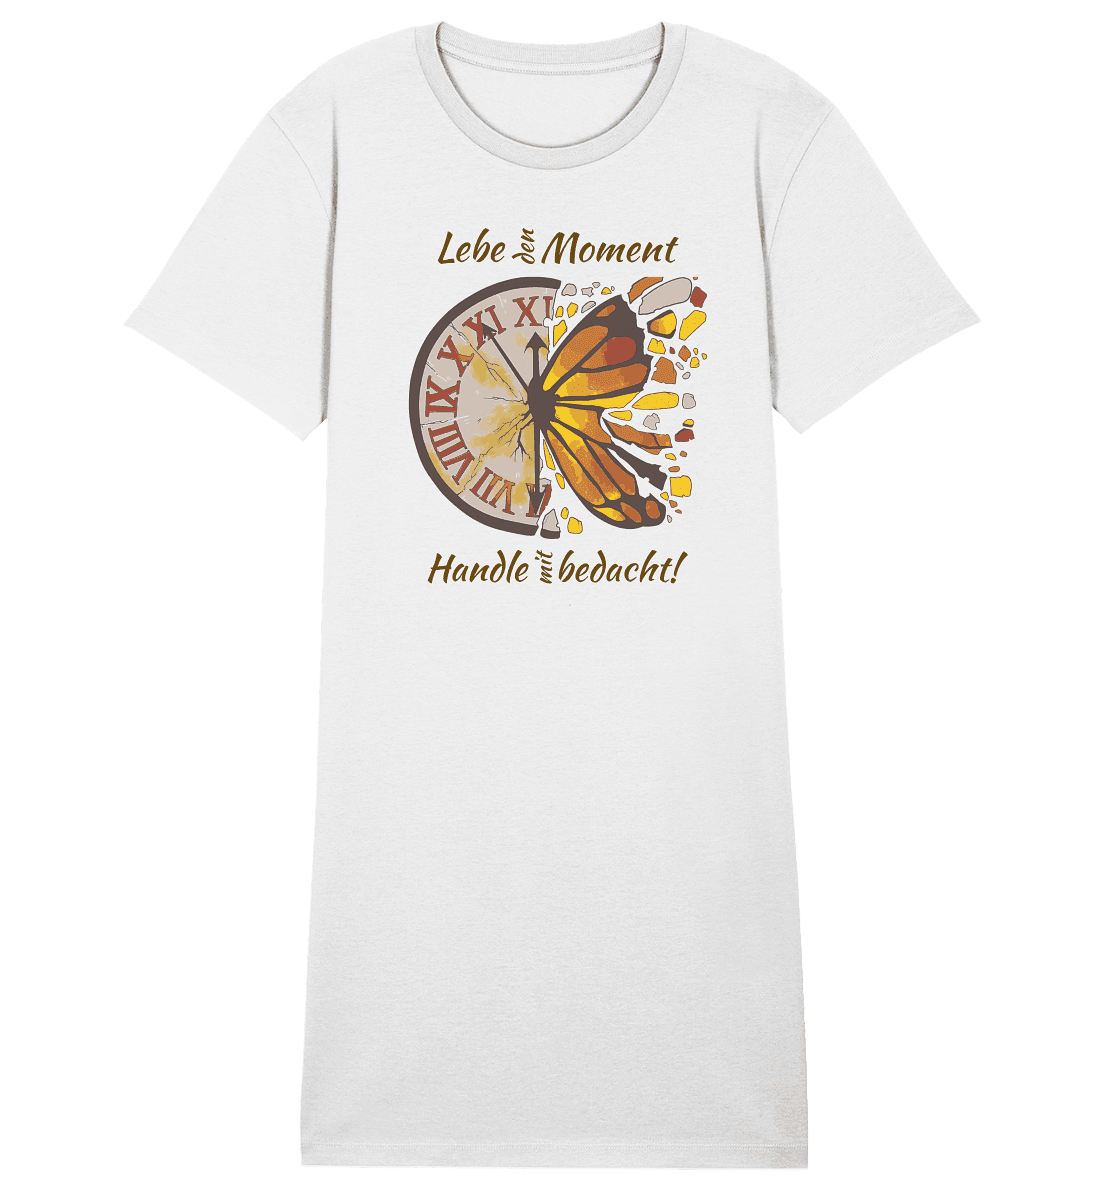 Lebe den Moment - Schmetterling - Weisheit - Ladies Organic Shirt Dress - HalloGeschenk.de #geschenkideen #geschenkidee #personalisiert #personalisierte #geschenk #geschenke